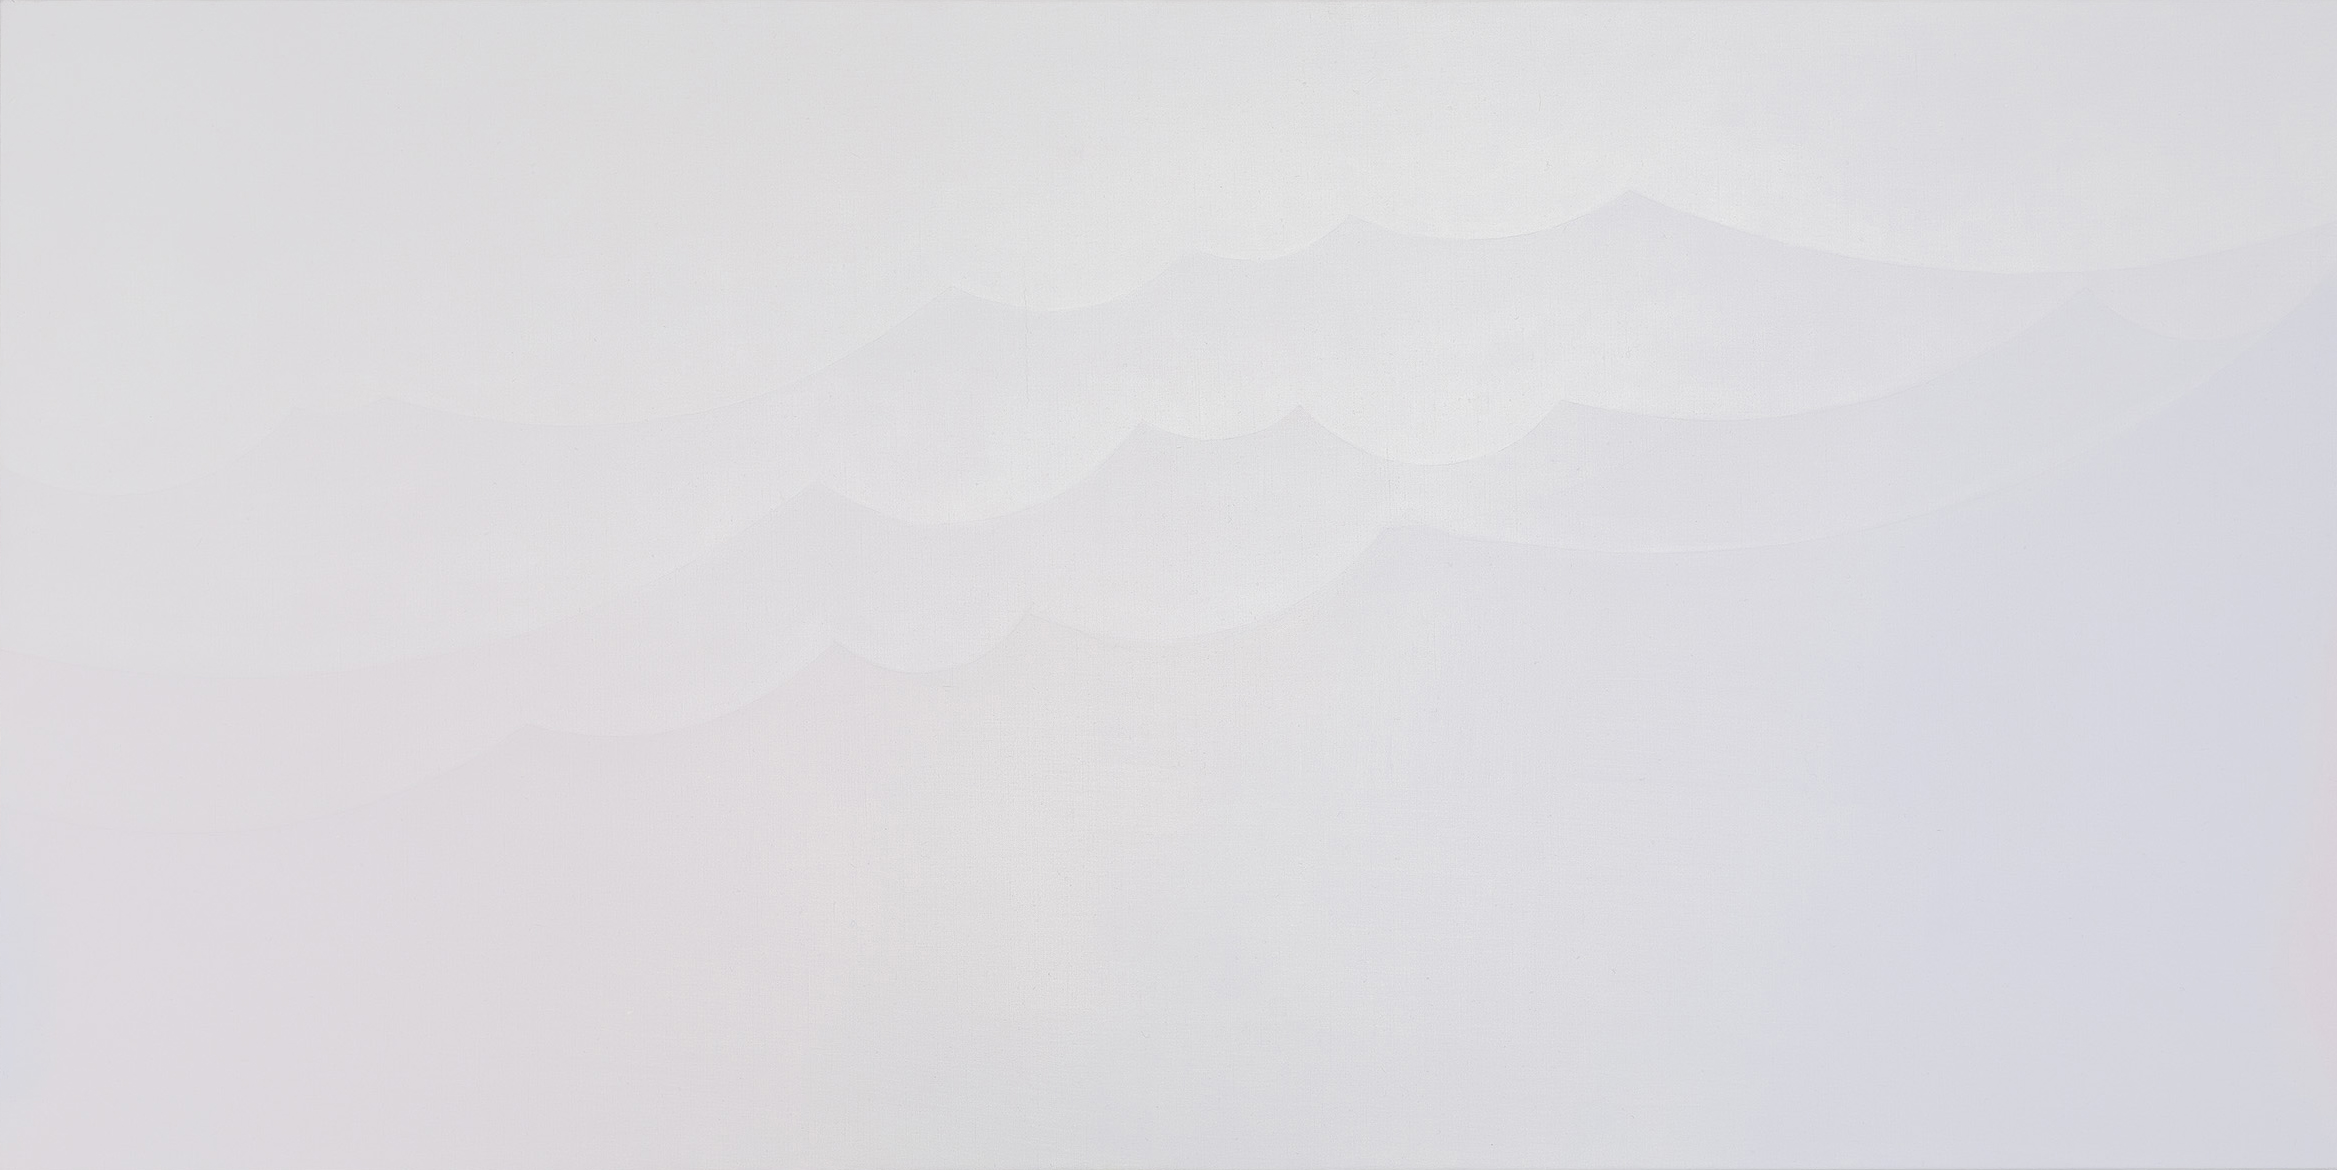 Rosslynd Piggott, <em>Tonal day and graduated cloud veil</em>, 2022-23, oil on linen 50 x 100 cm. Courtesy of the artist and Sutton Gallery, Melbourne. Photo: Christian Capurro